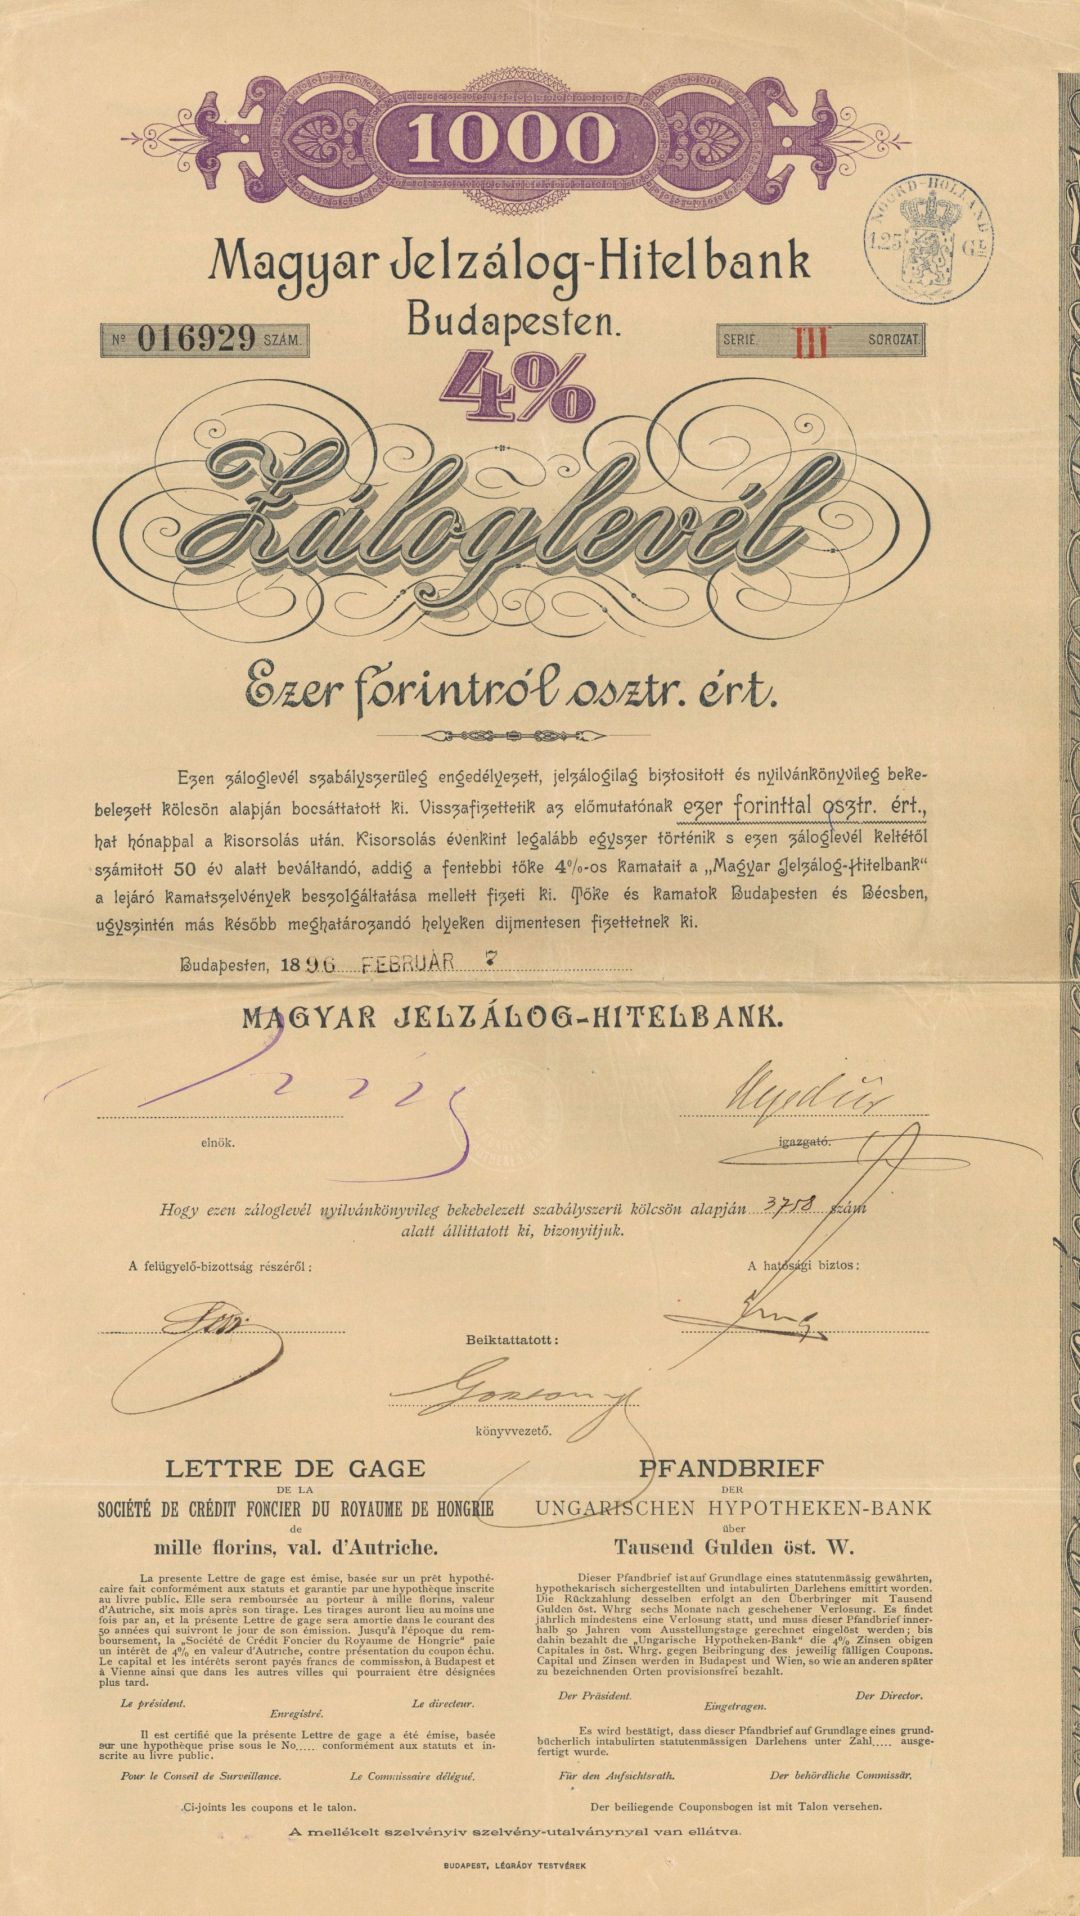 Magyar Jelzalog-Hitelbank Budapesten - 1,000 Forint Denomination Uncanceled Bond